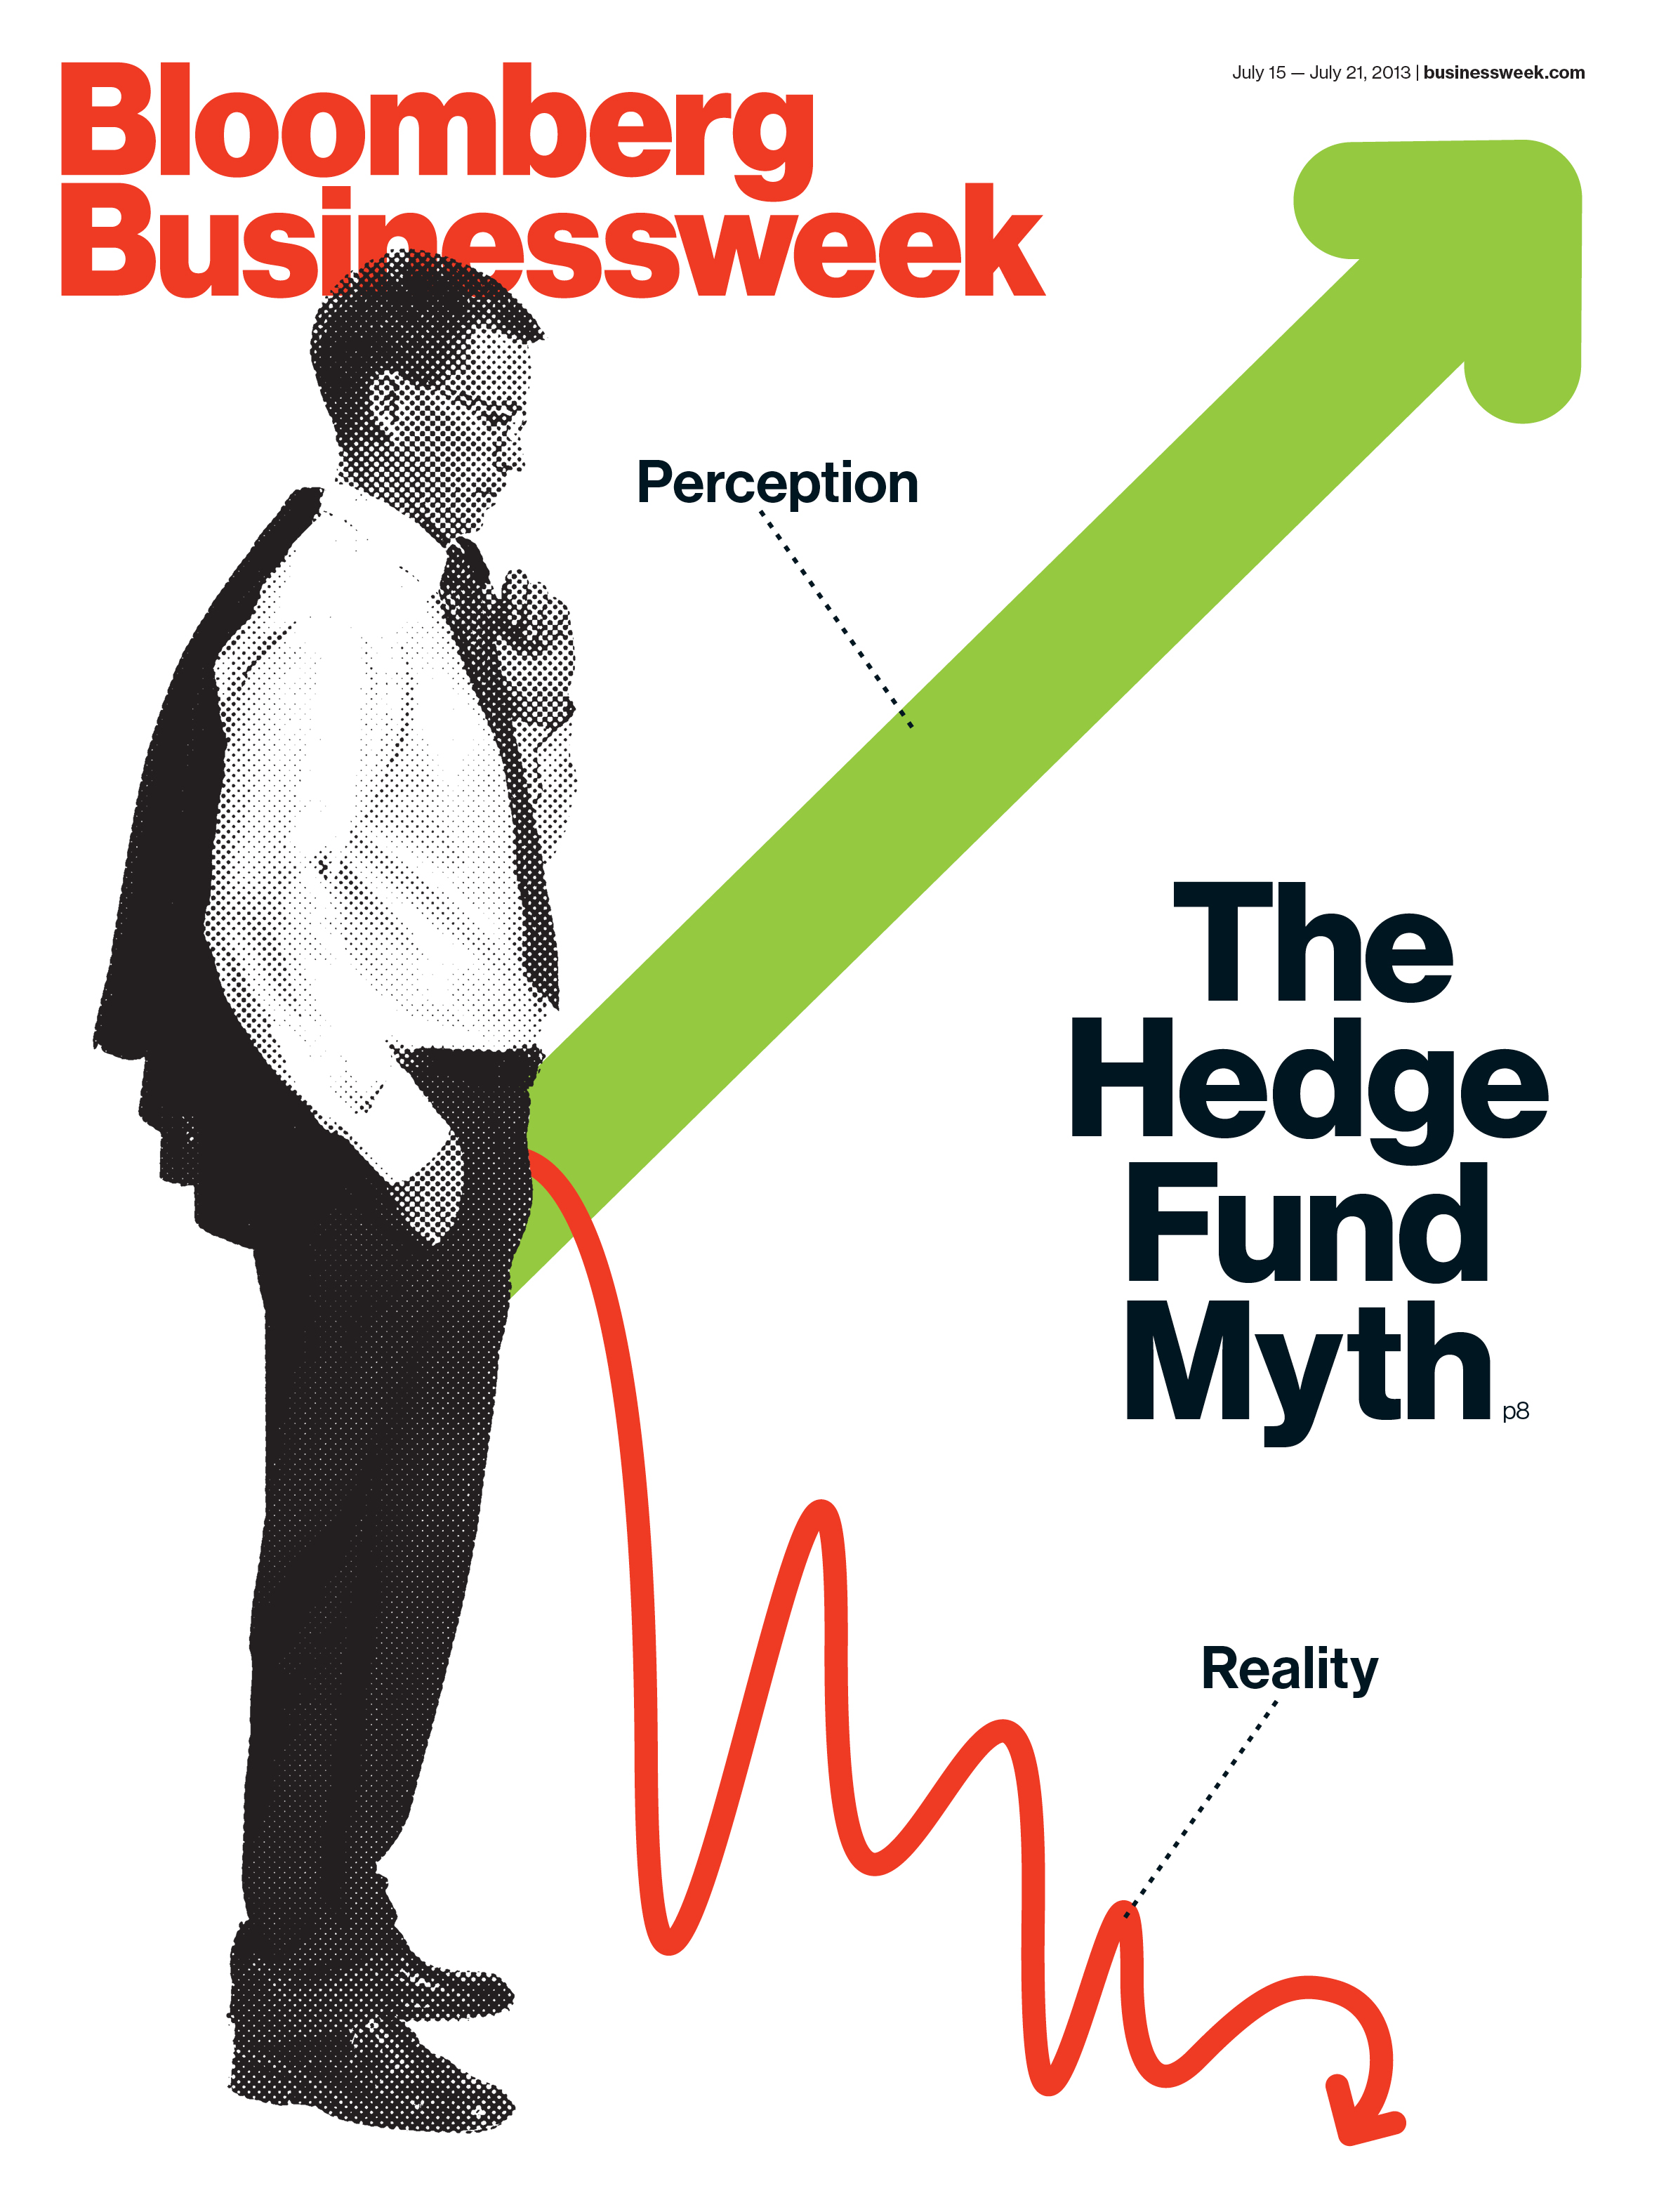 Bloomberg Businessweek-July 15-21, "The Hedge Fund Myth"